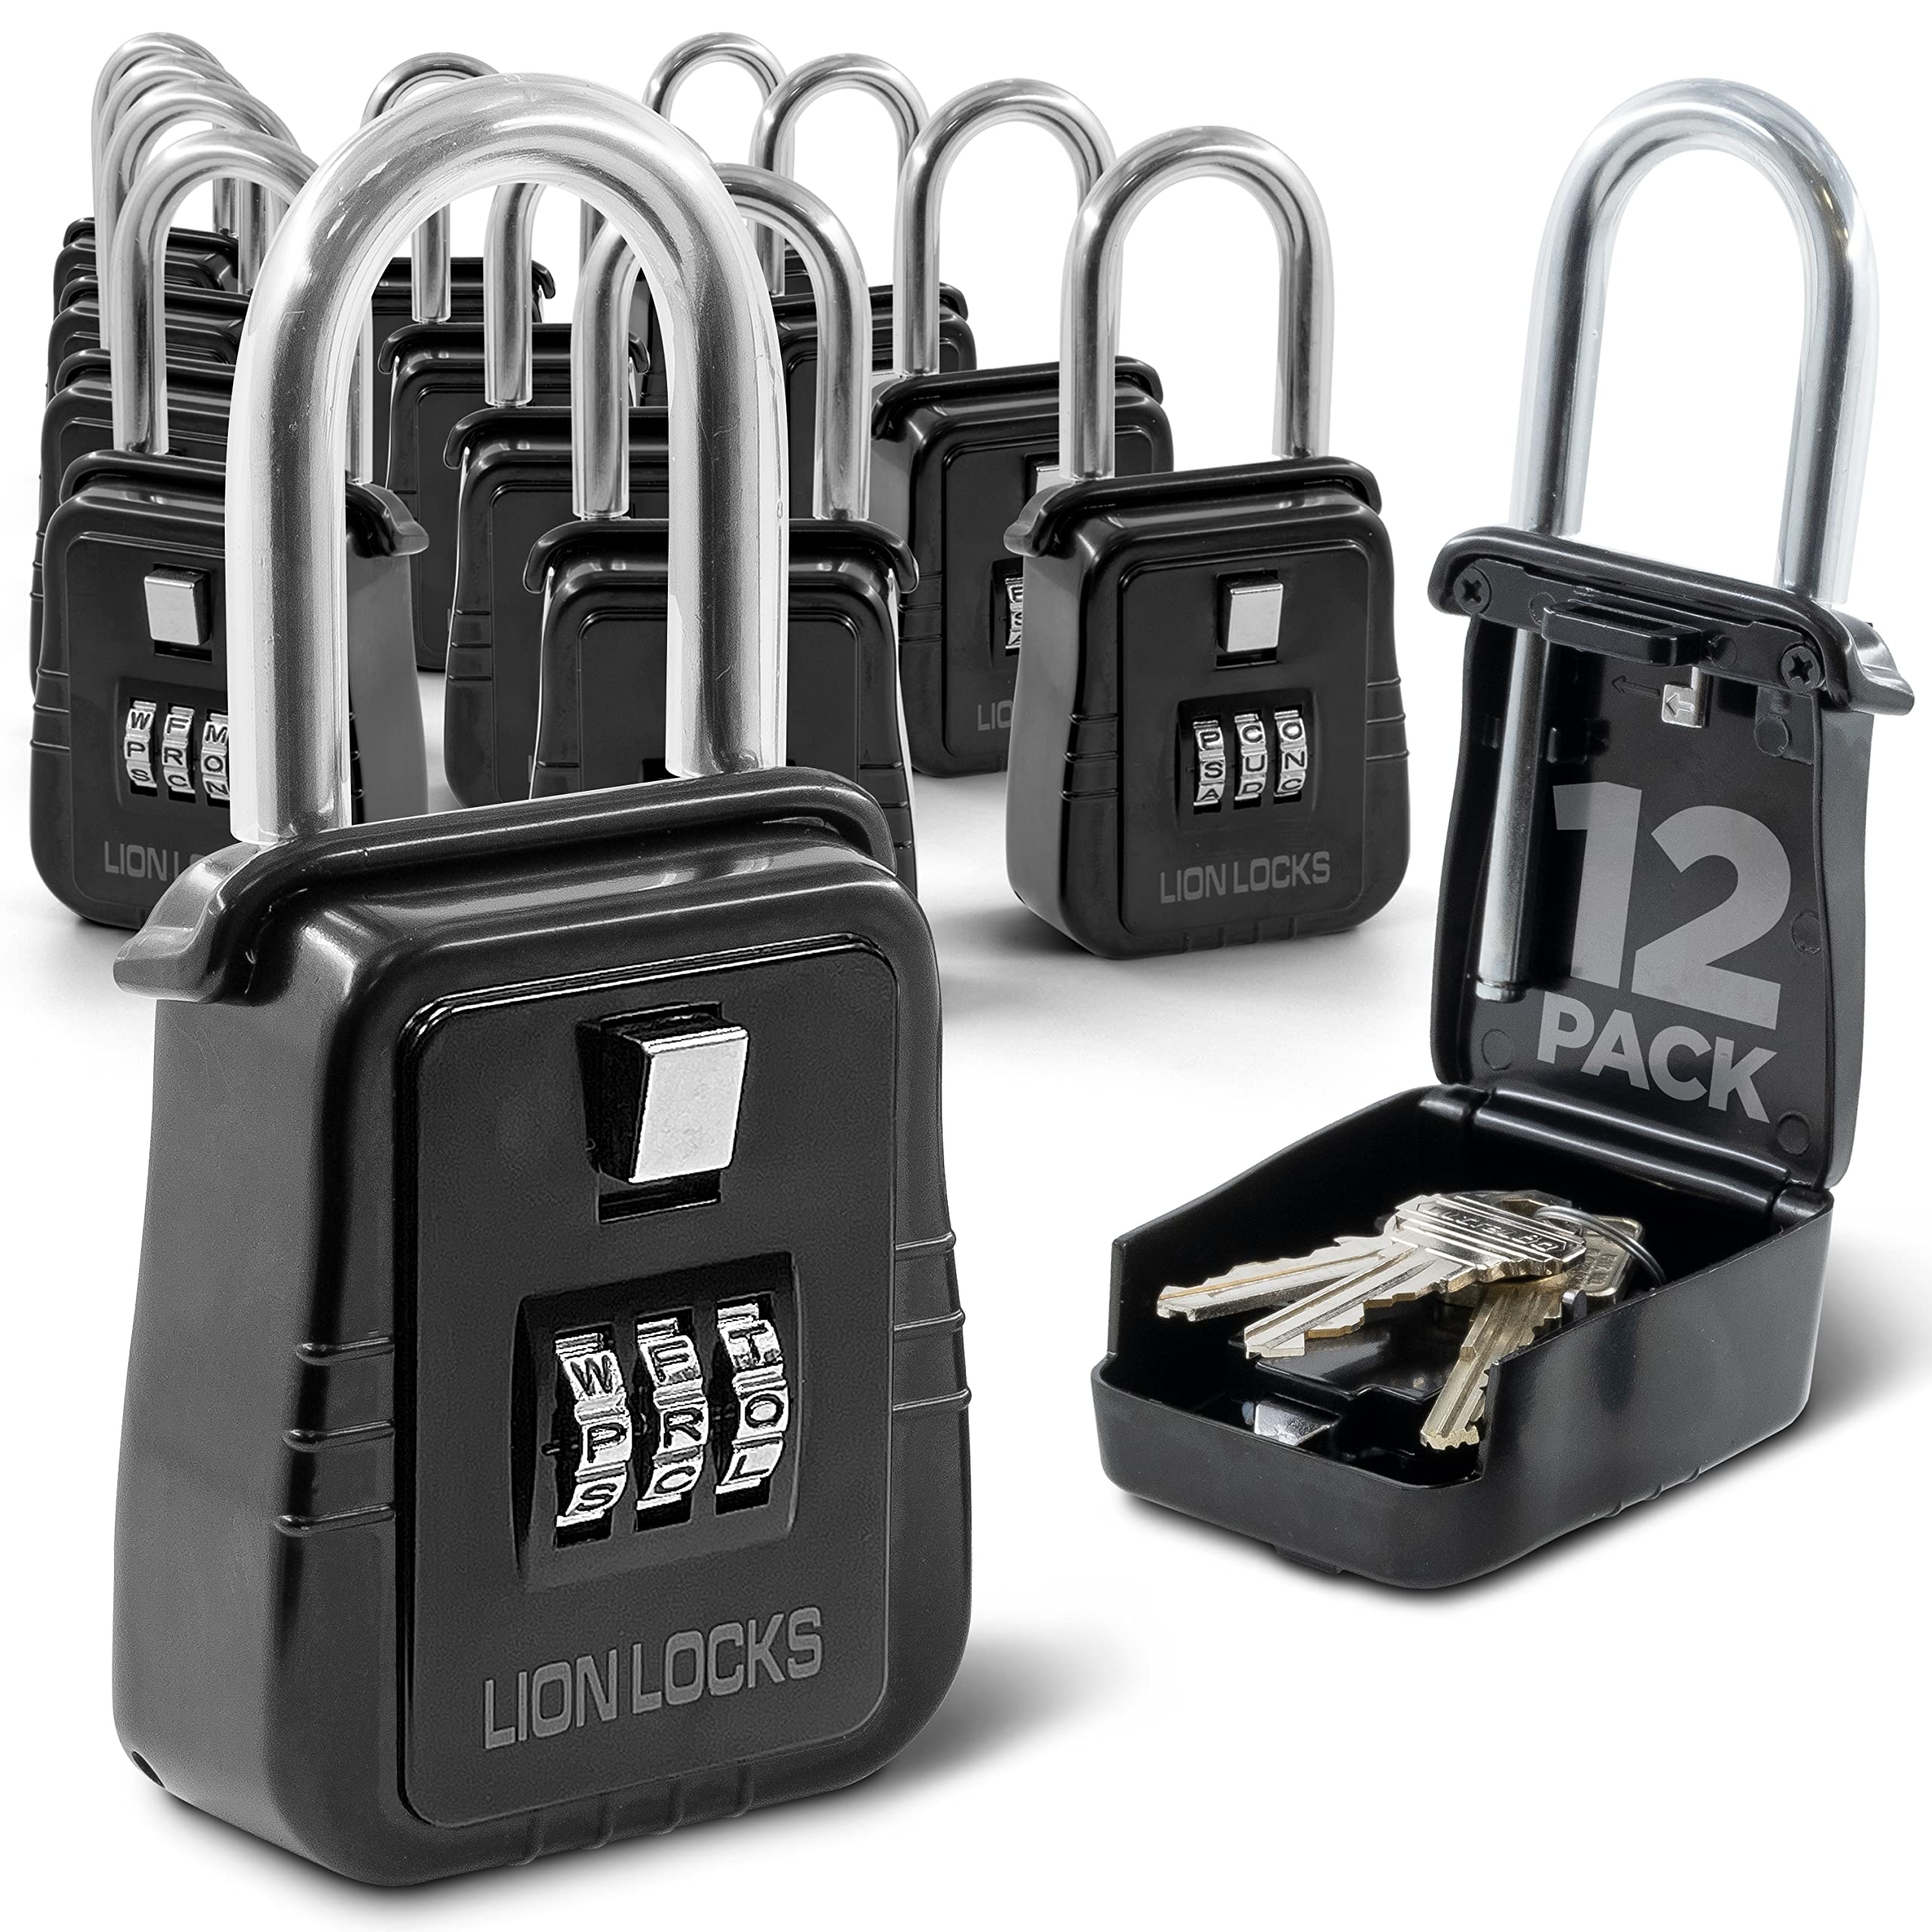 A padlock or a locked safe